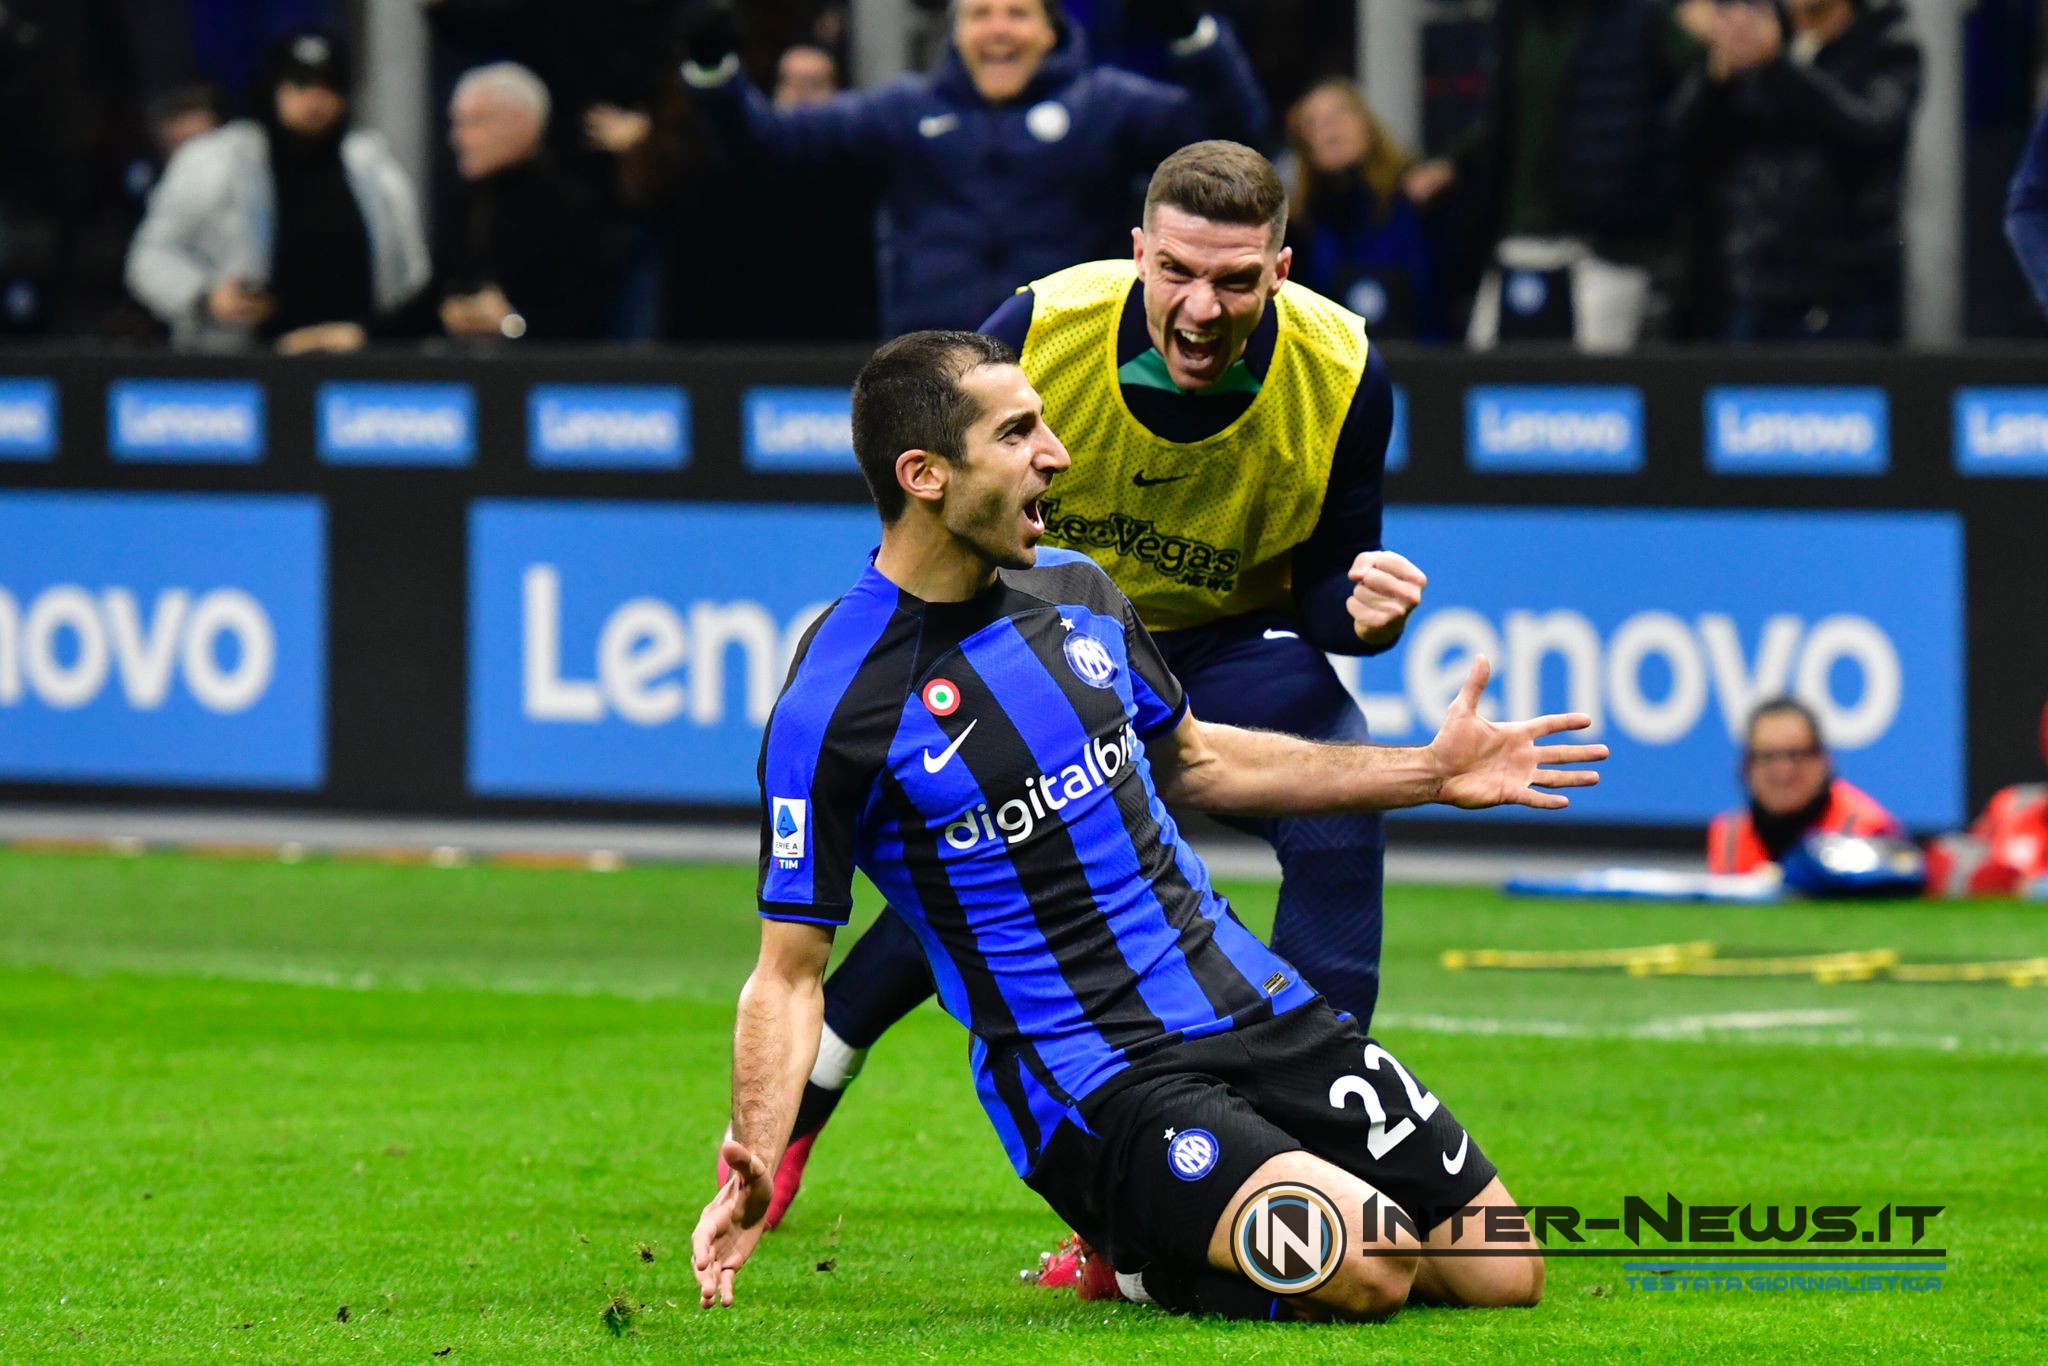 Inter Fiorentina, fine del riposo per Mkhitaryan: senza Calhanoglu, serve lui